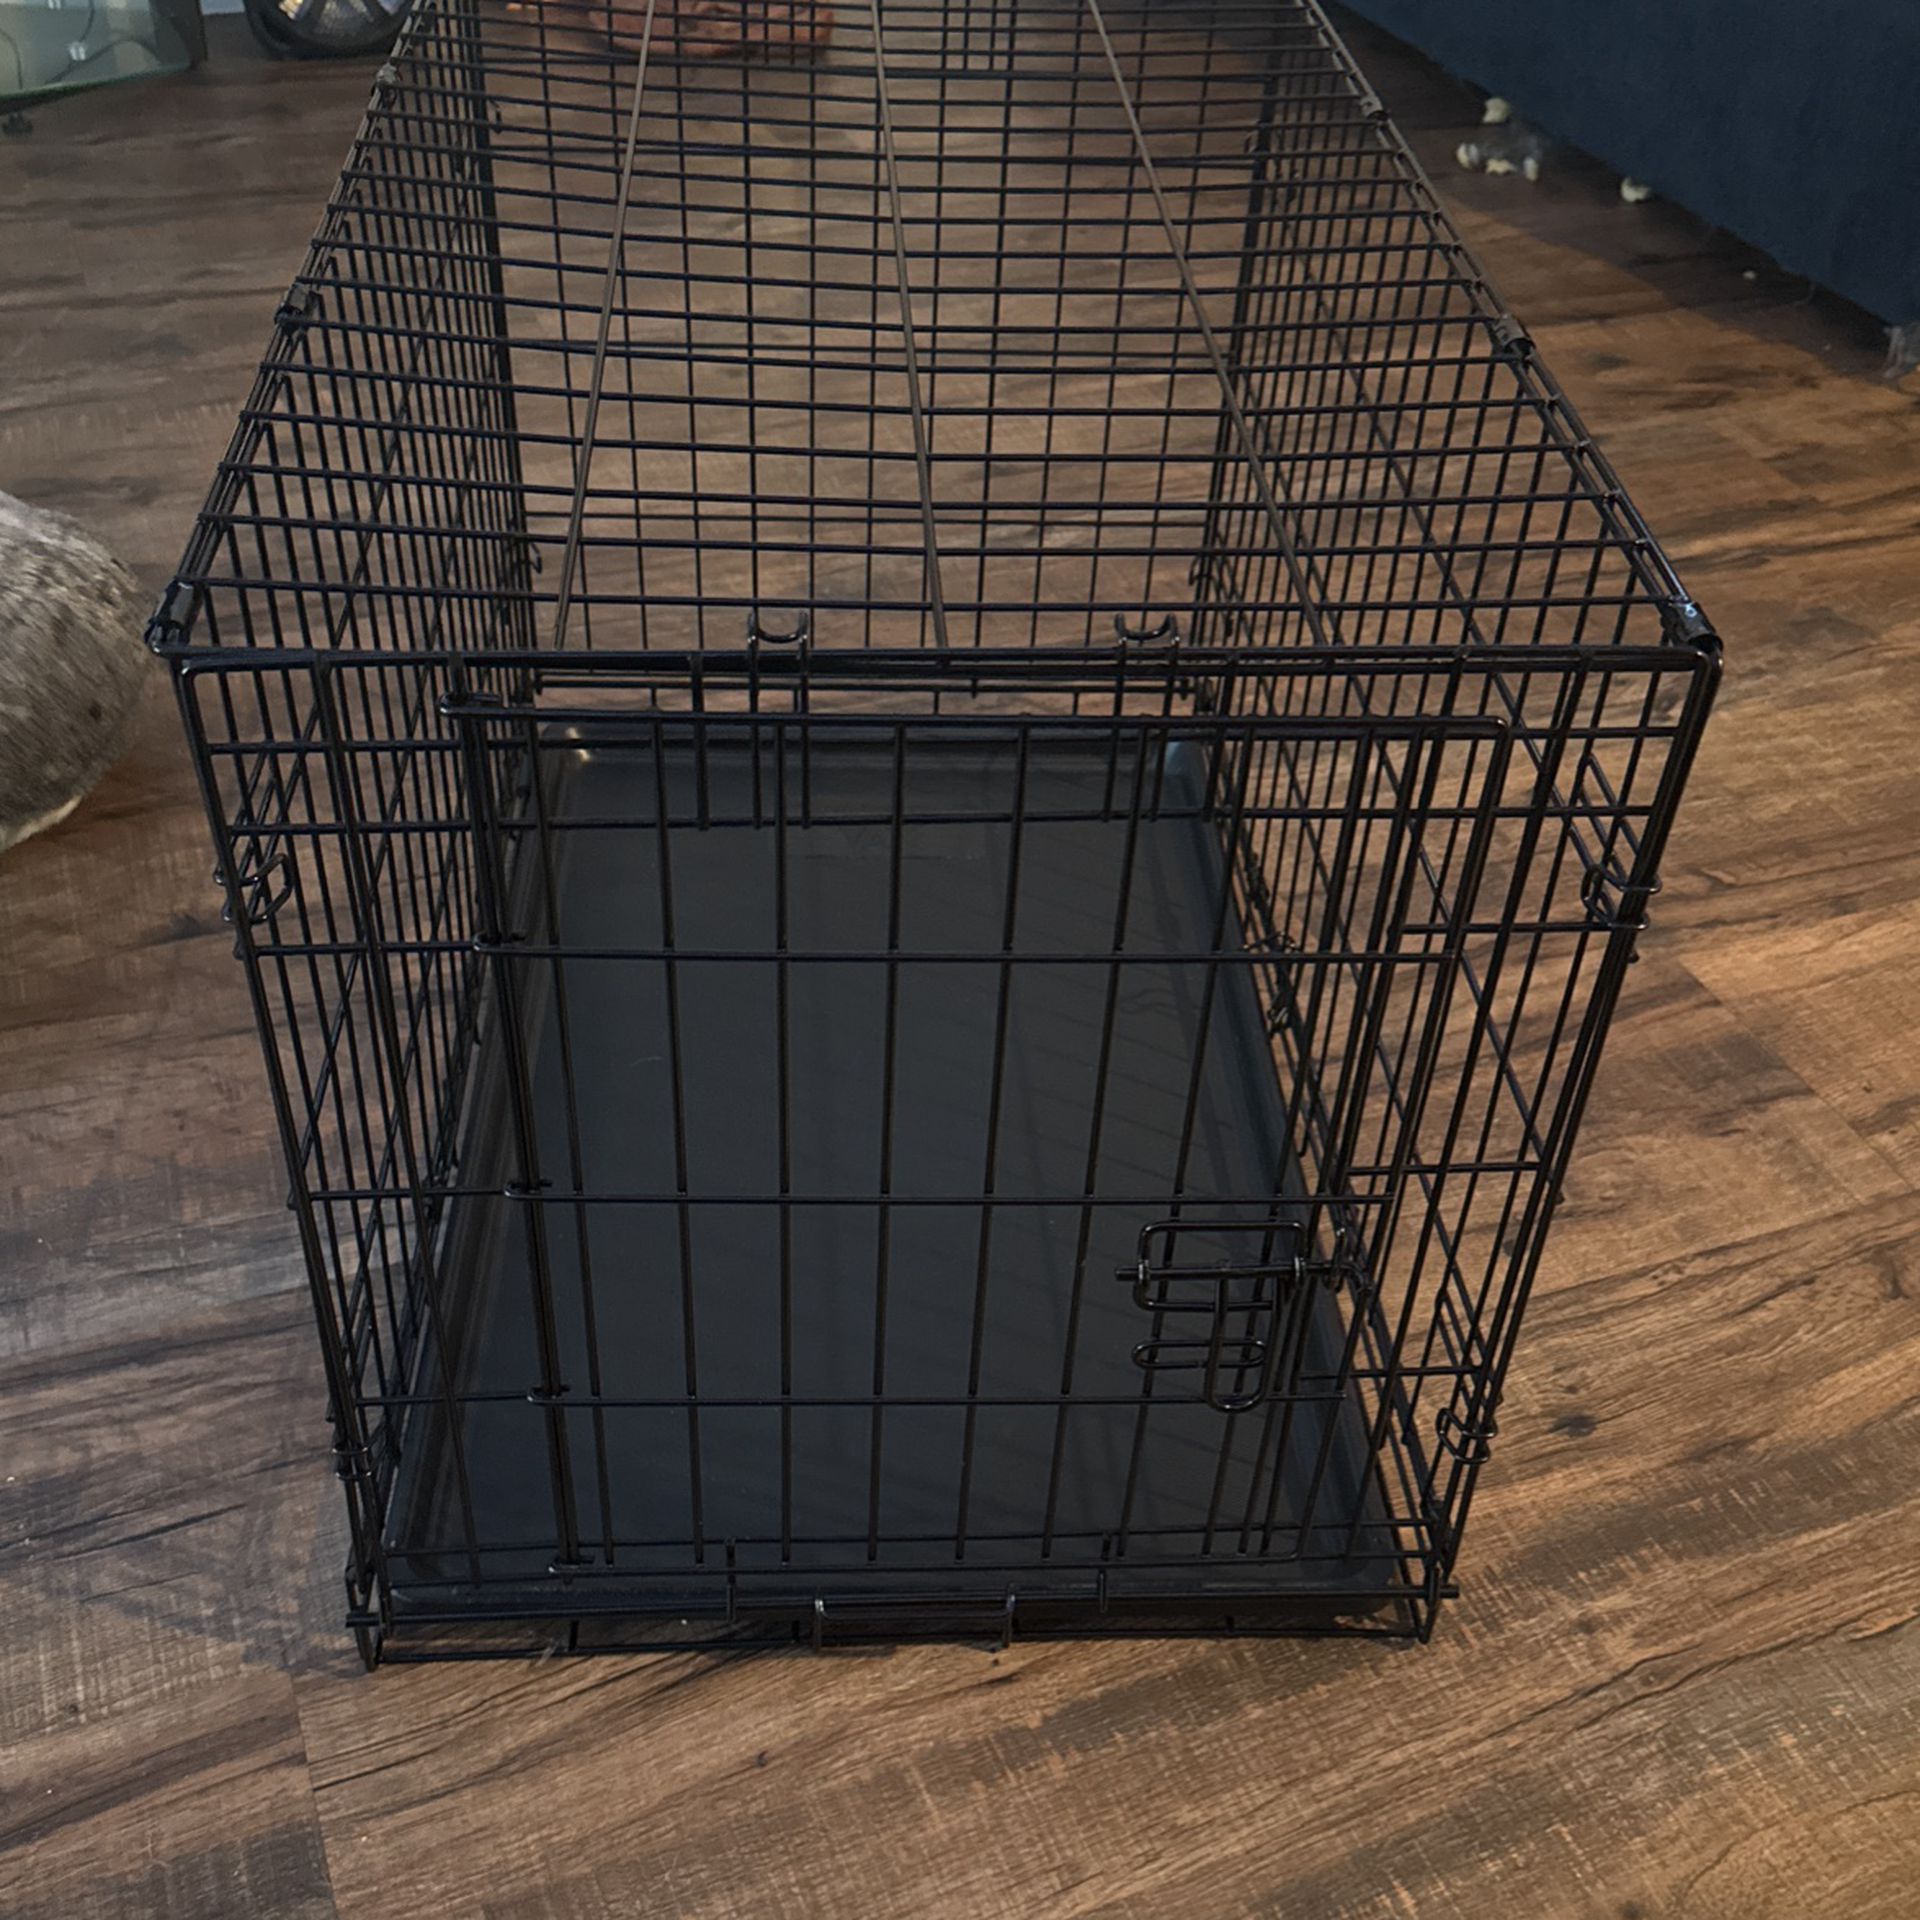 Medium Sized Dog Crate (Metal)